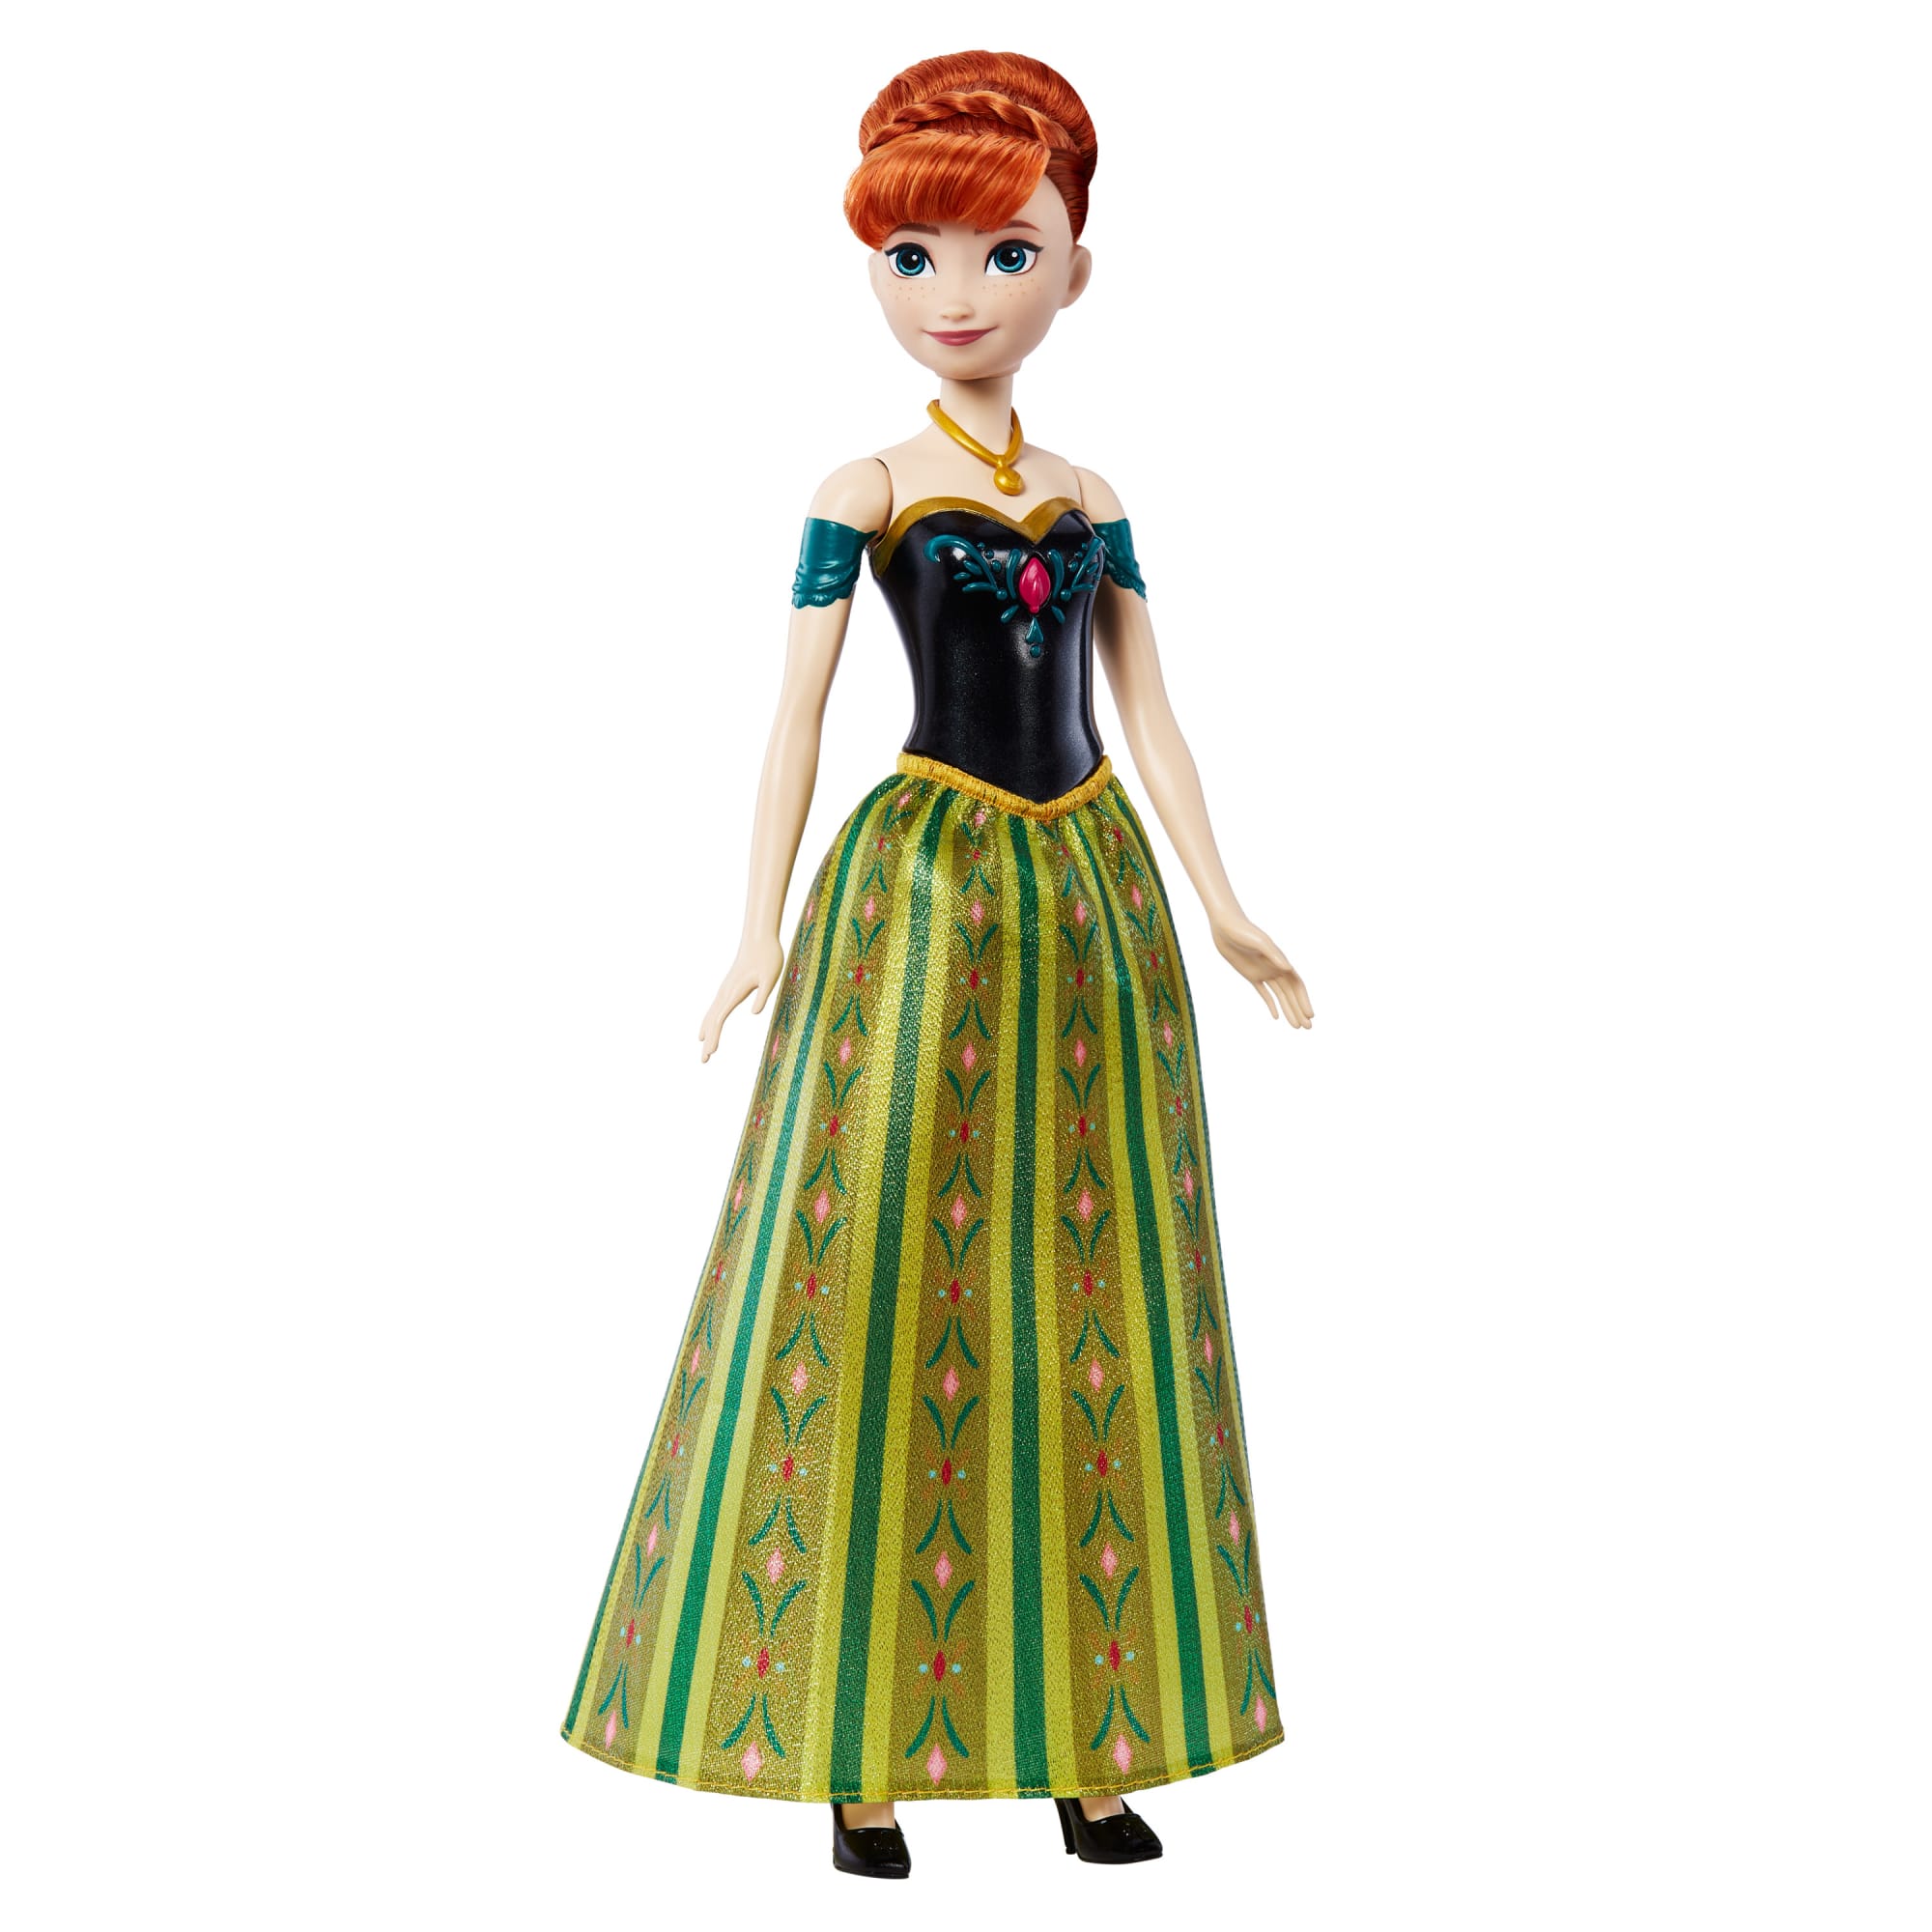 Frozen Princess Singing Anna Fashion Doll